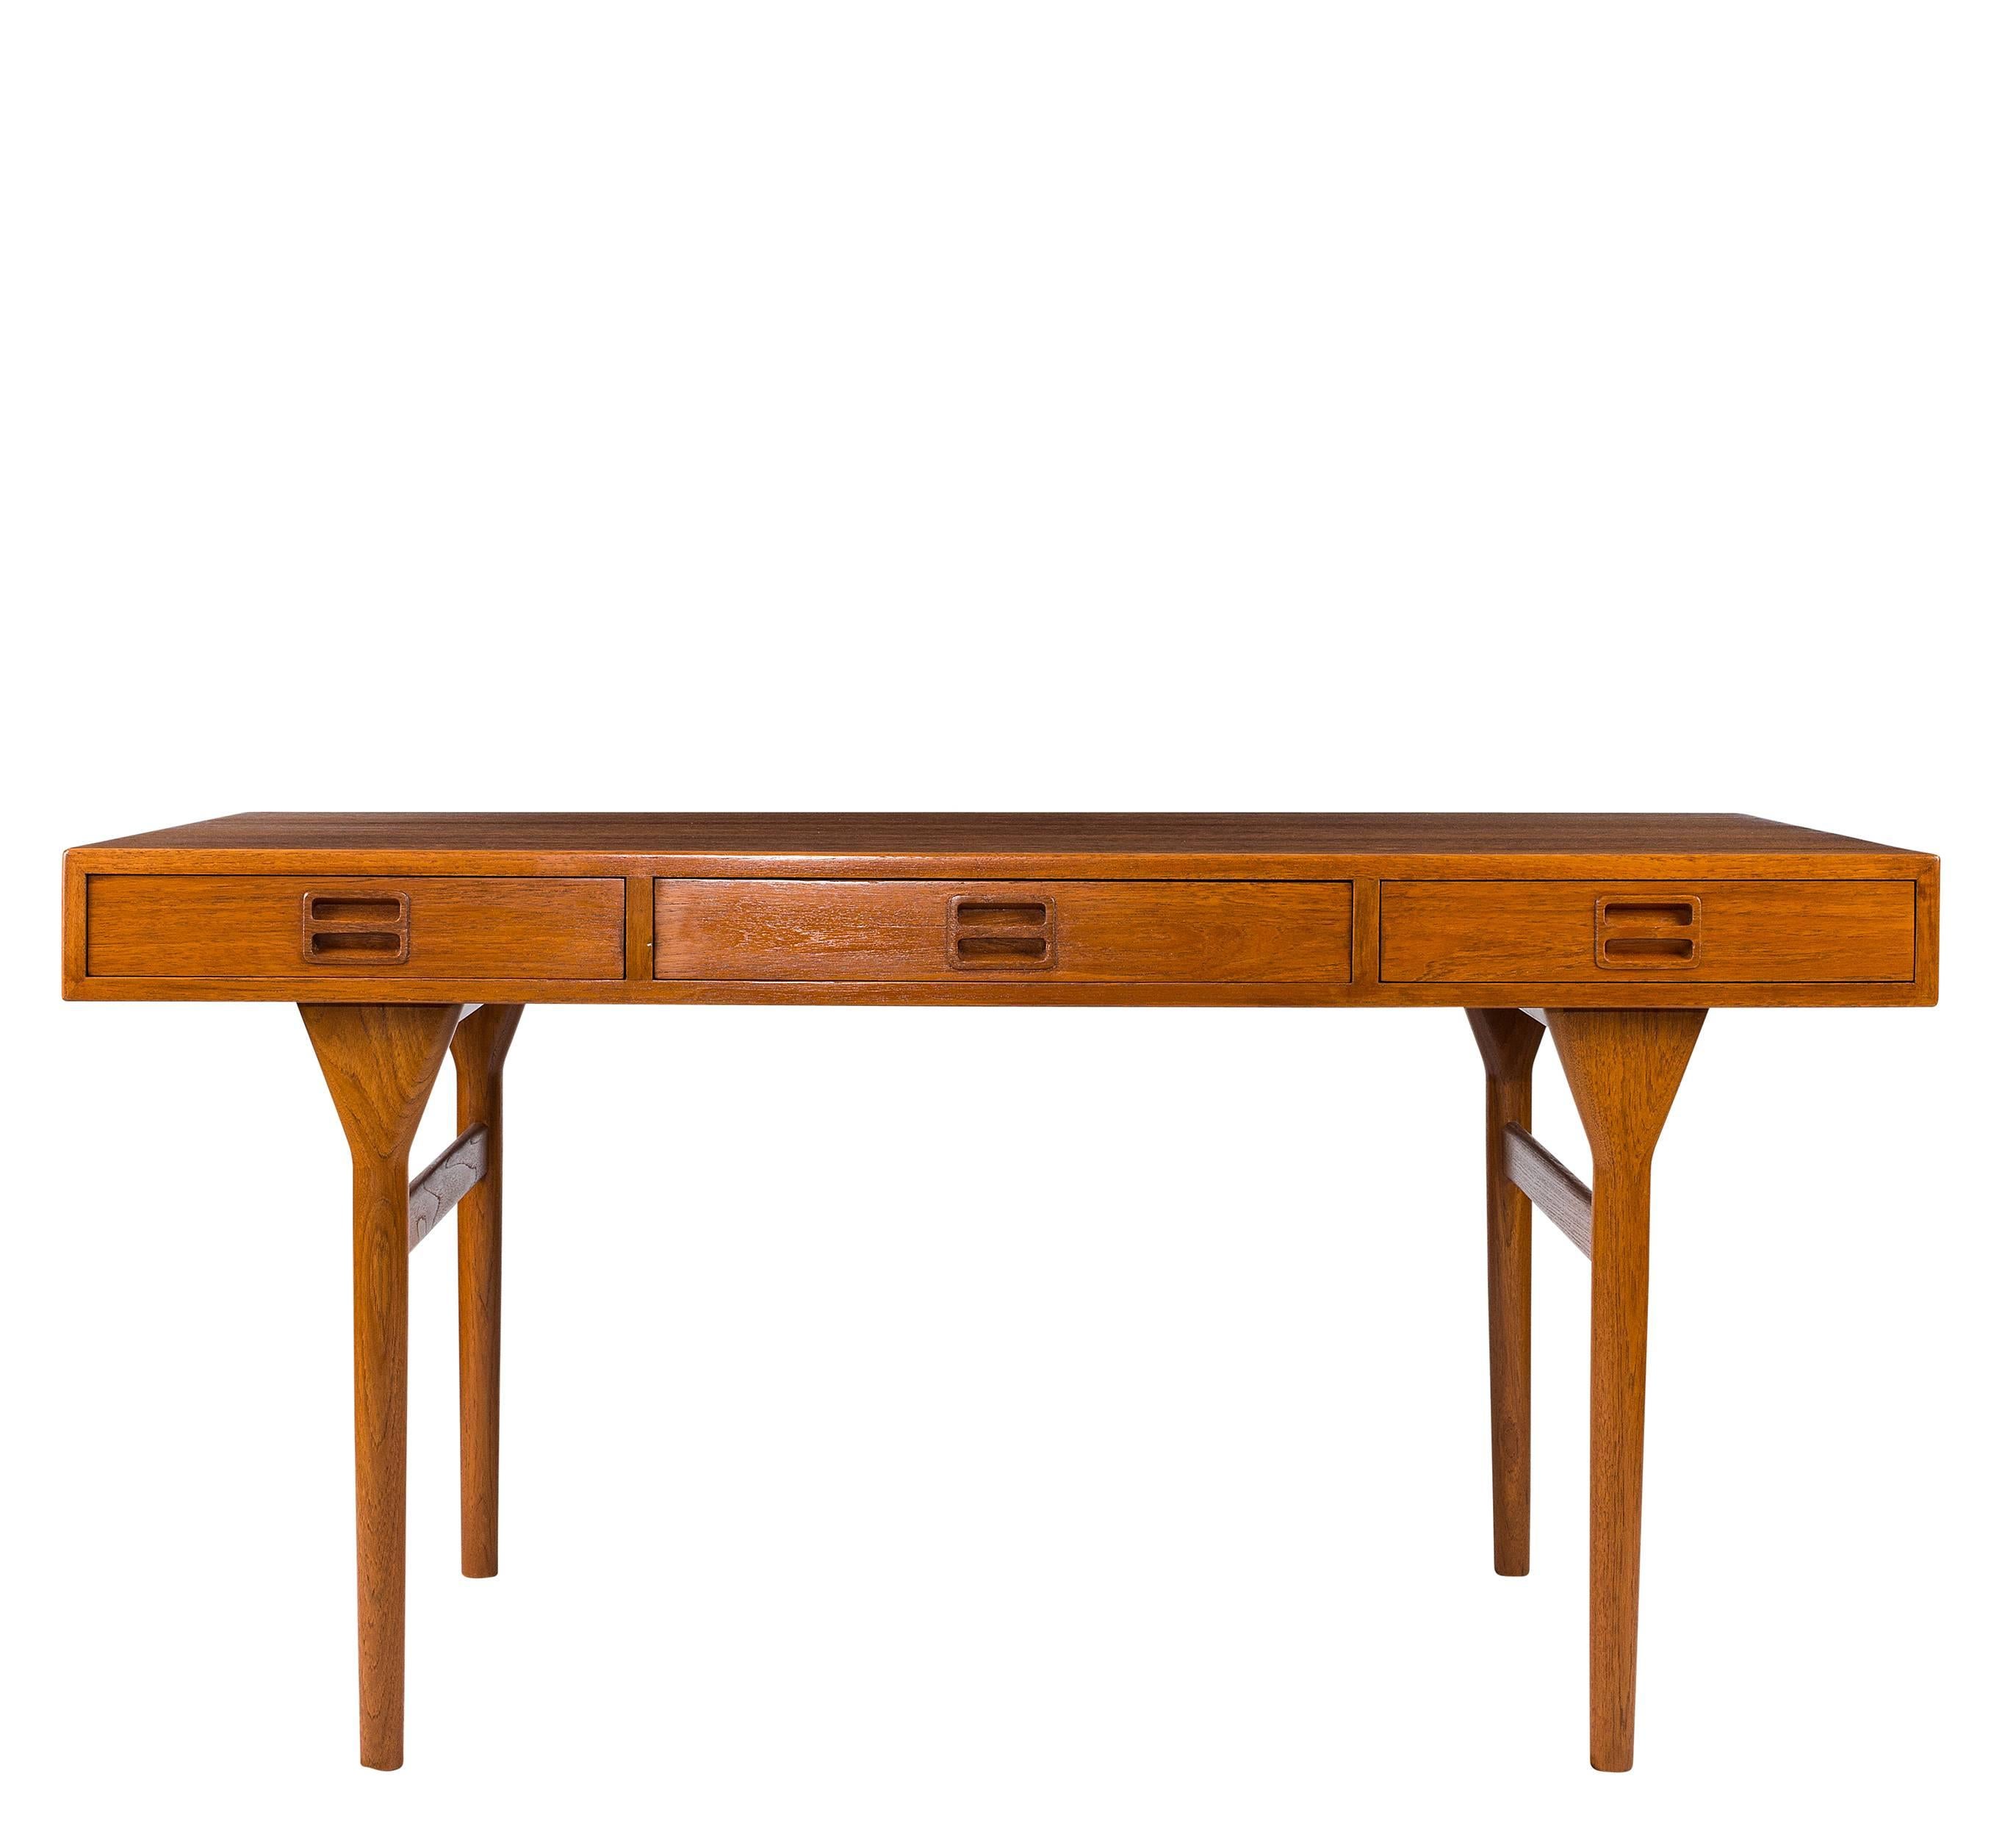 Nanna Ditzel desk designed in 1958 and produced by Soren Willadsen Mobelfabrik.